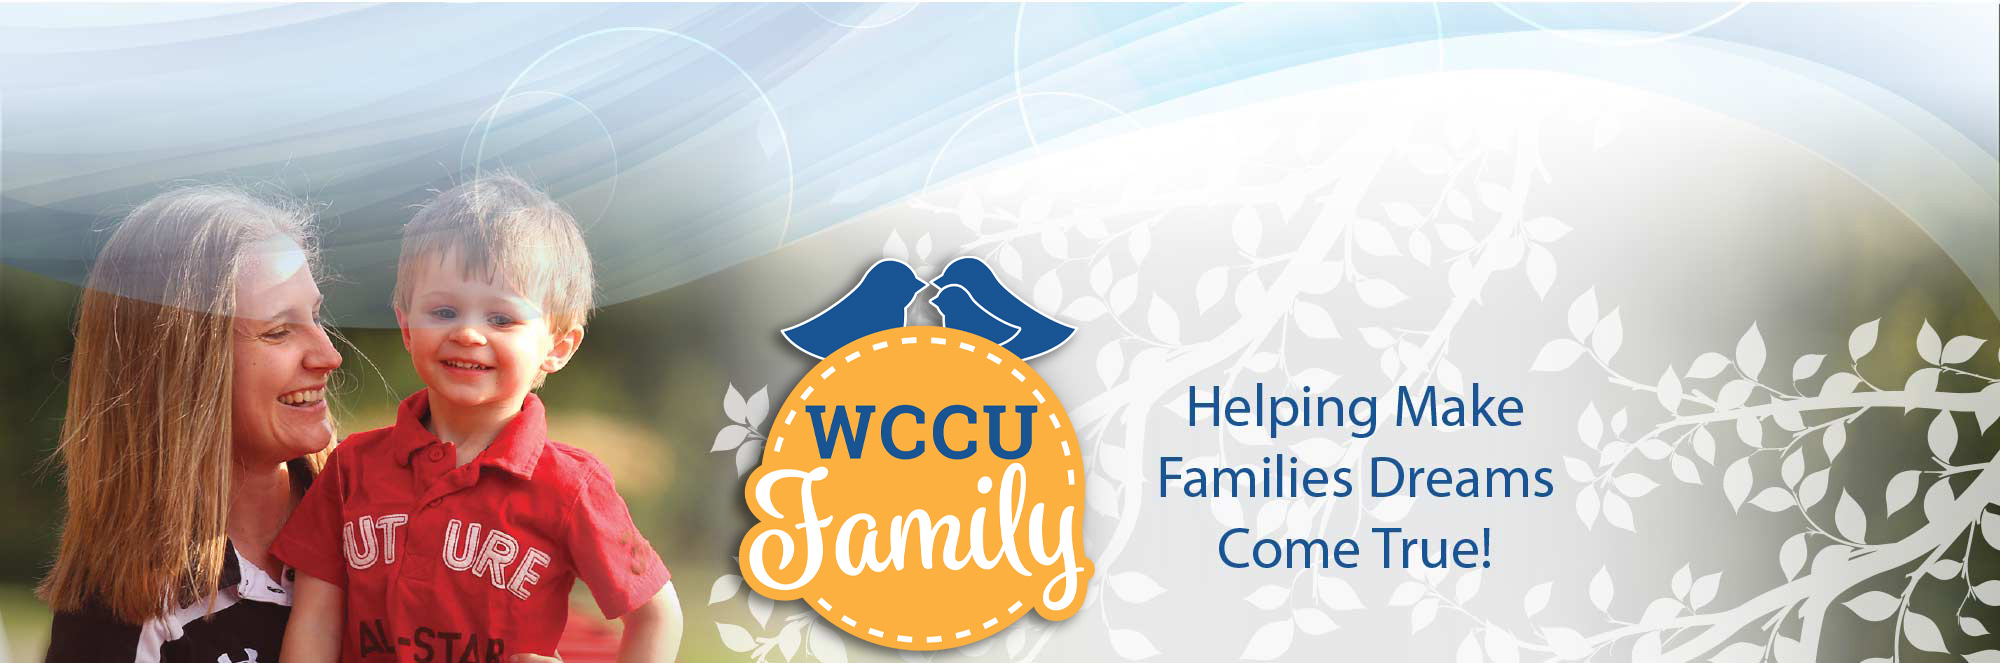 WCCU Moms. Helping Make Families Dreams Come True!